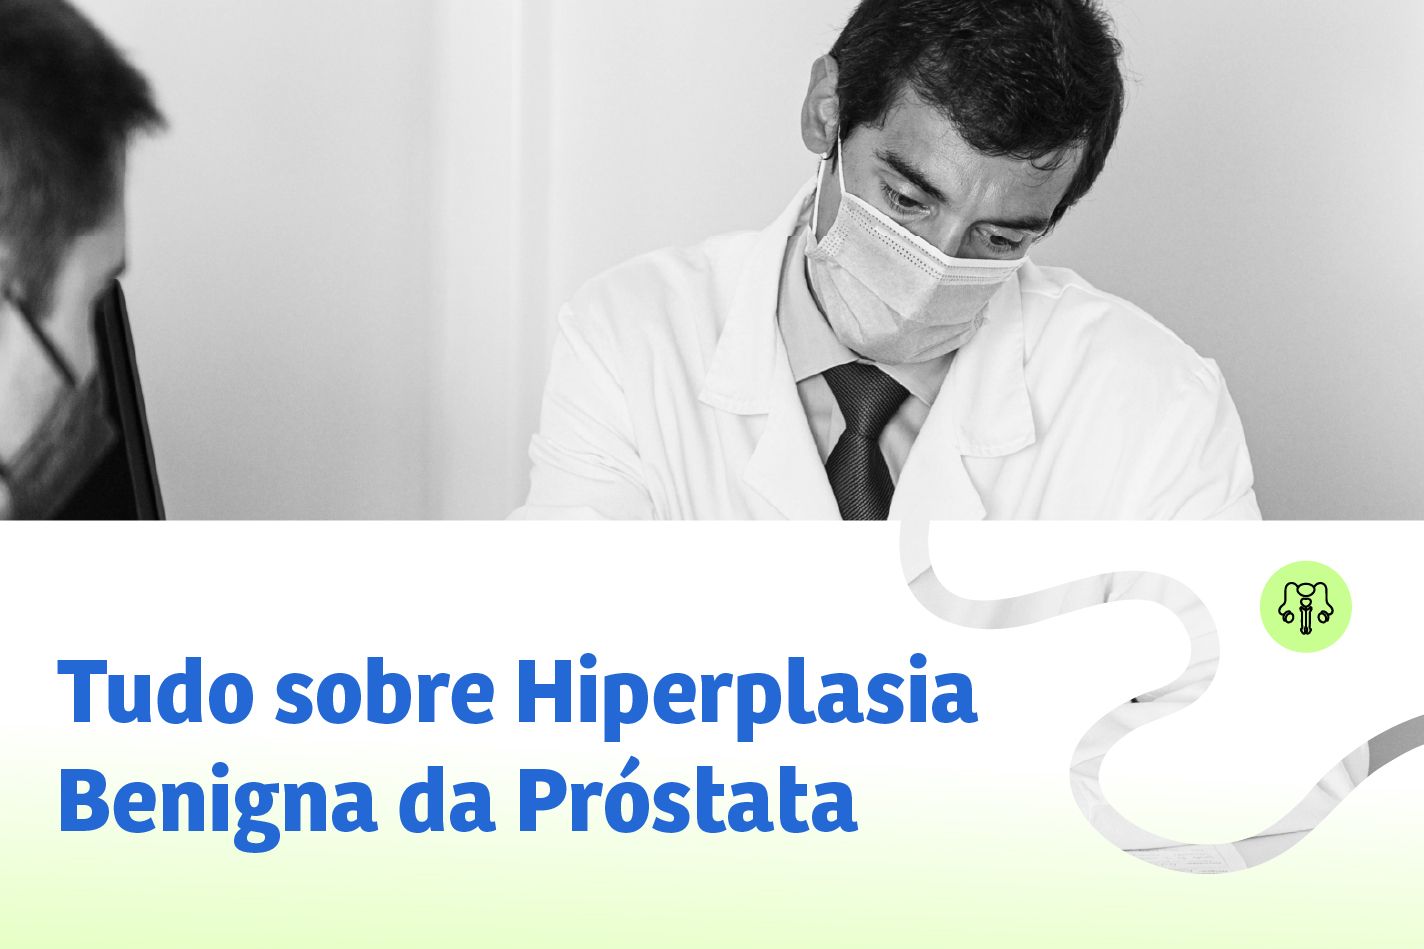 hiperplasia benigna da próstata